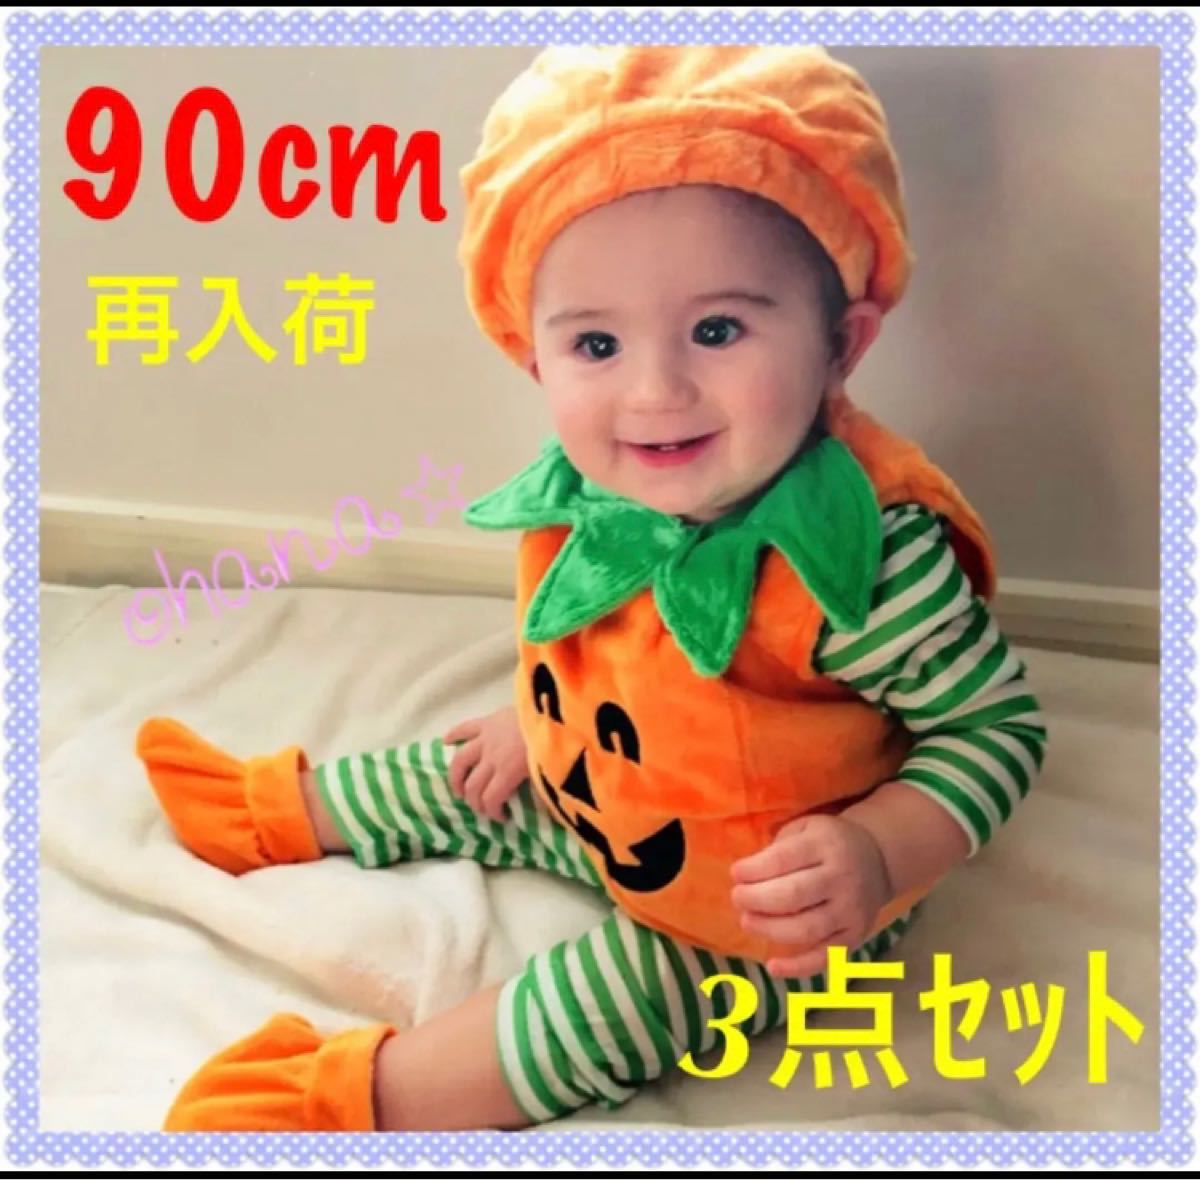 90cm ハロウィン かぼちゃ ベビー ハロウィン コスプレ 衣装 子供 仮装